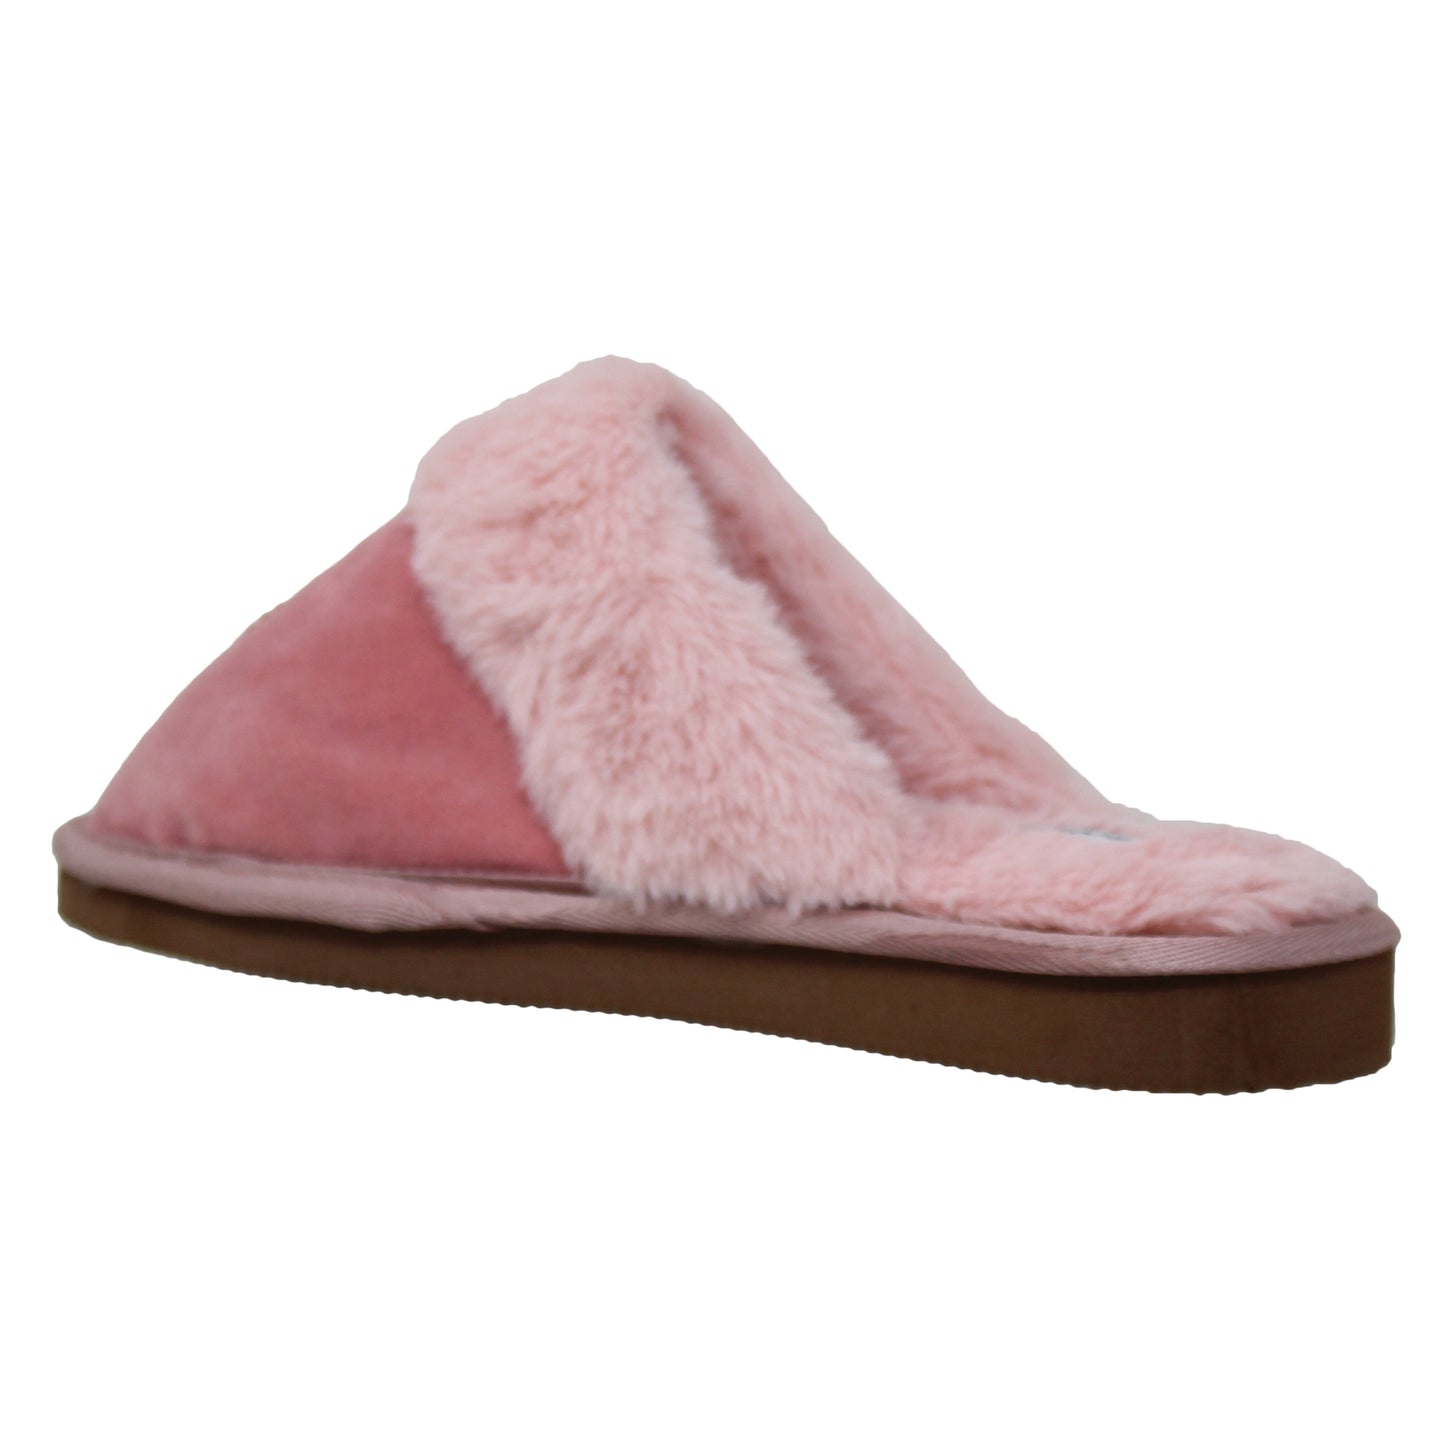 SOBEYO Furry Clog Slippers Indoor/Outdoor Fur Lining Pink Suede